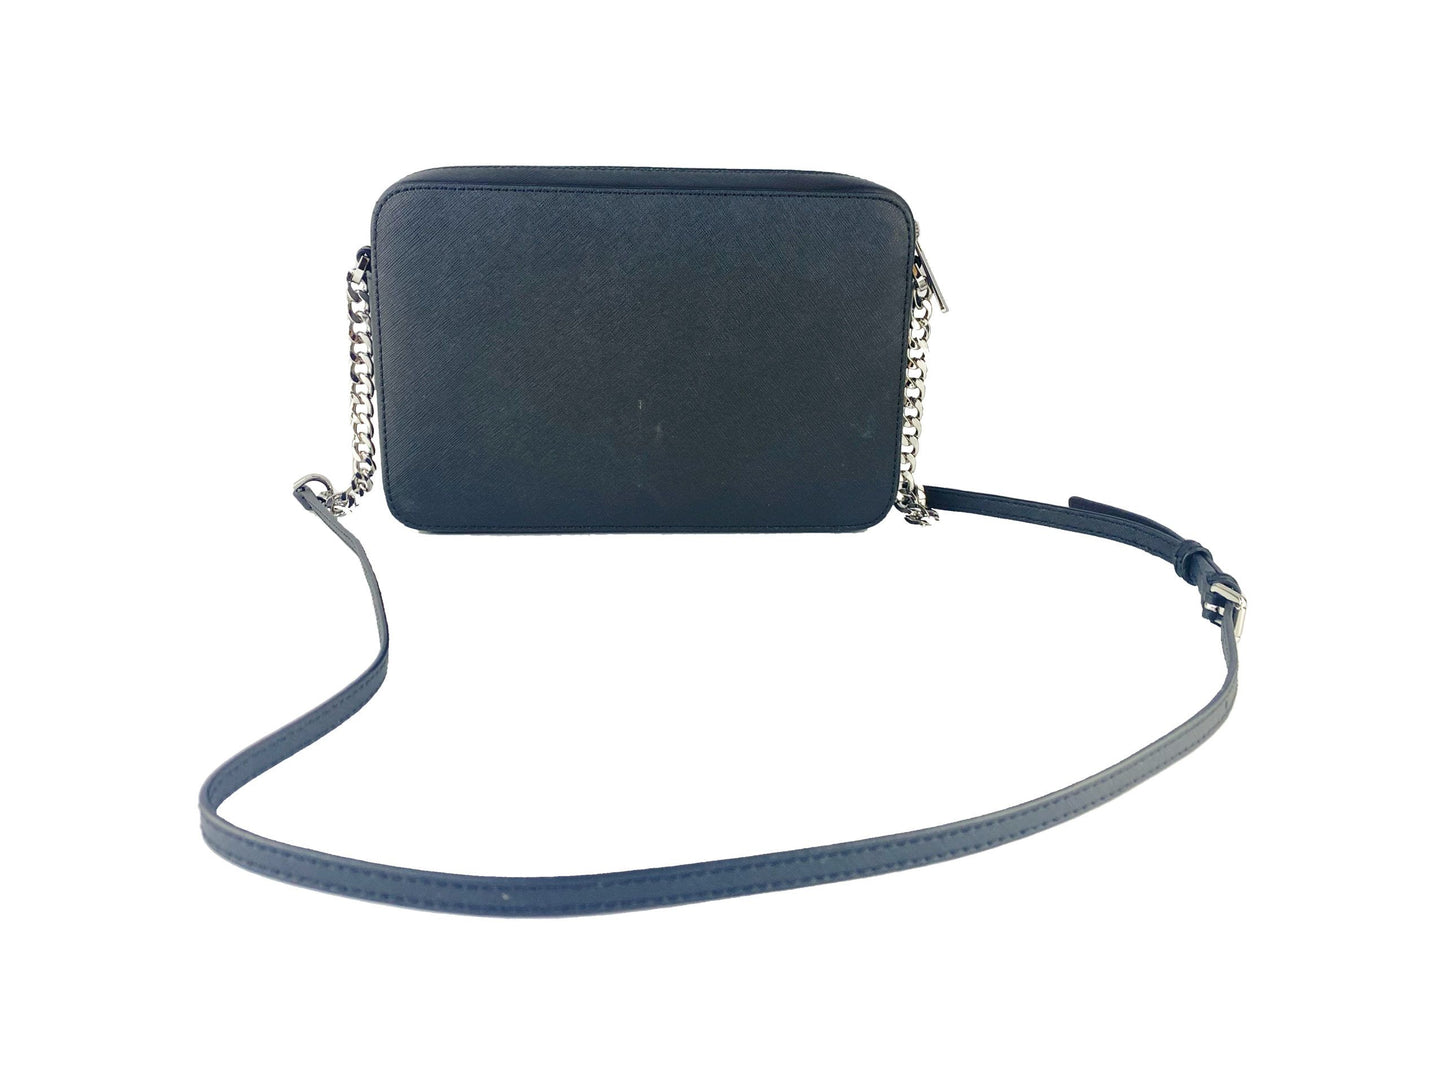 Michael Kors Jet Set Large East West Saffiano Leather Crossbody Bag Handbag (Black Solid/Silver Hardware) - Gio Beverly Hills